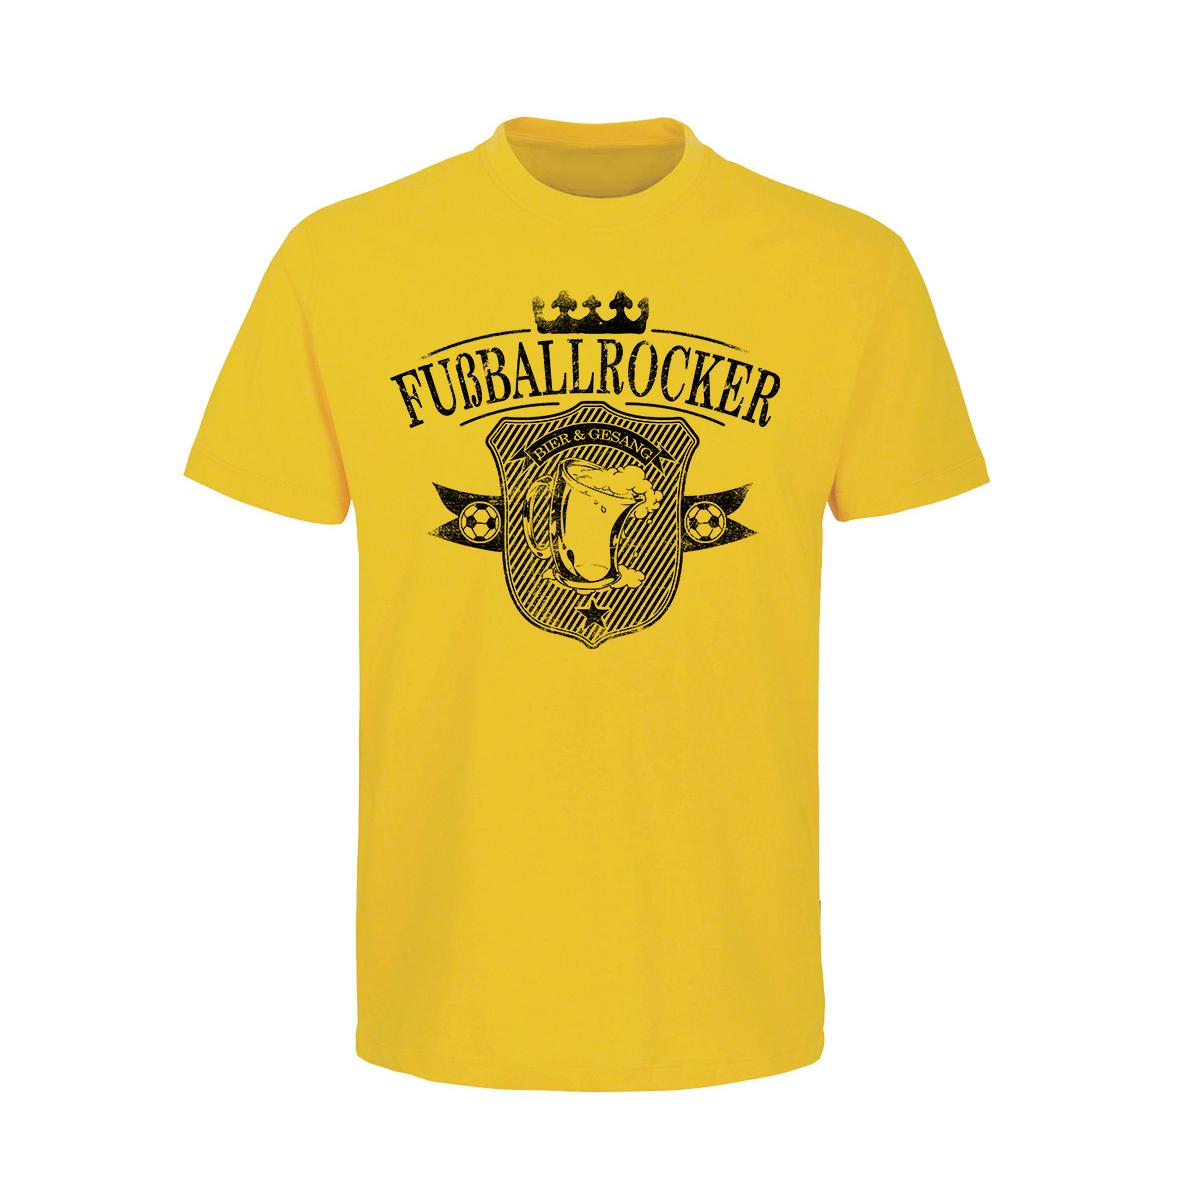 Bier und Gesang - Fußballrocker - Männer T-Shirt - gelb